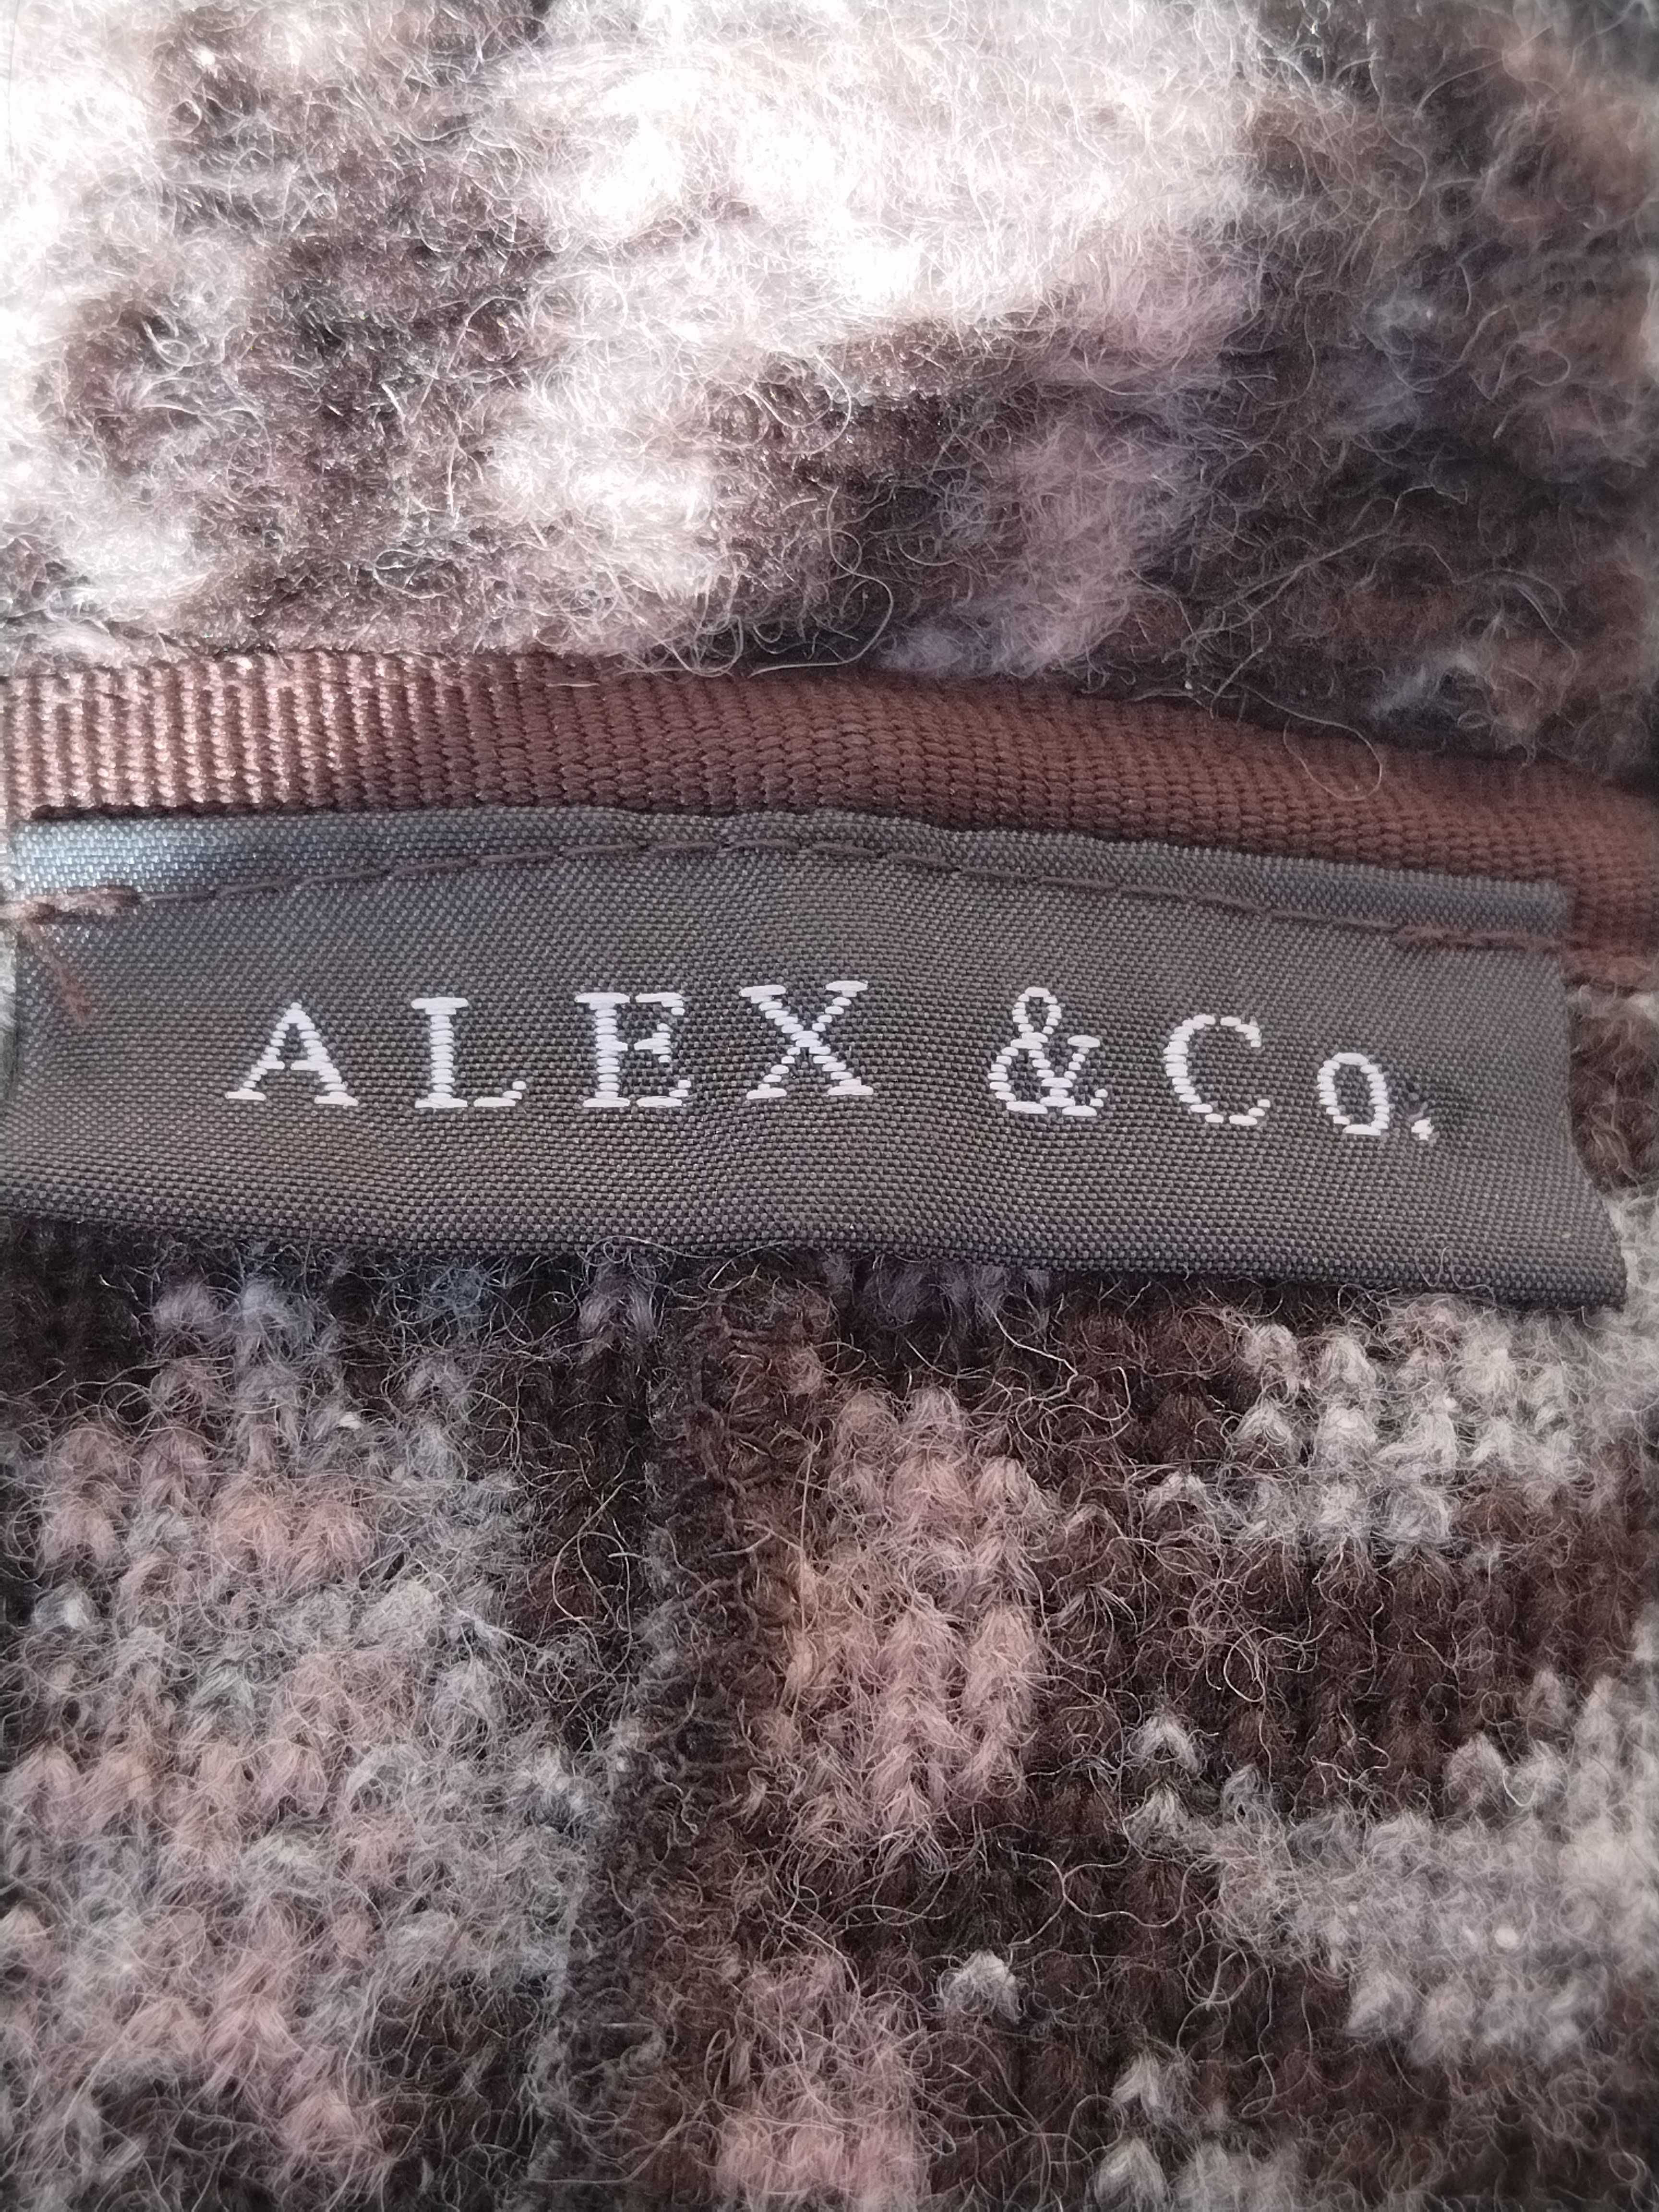 Alex & co пиджак, кардиган шерсть, xxl.